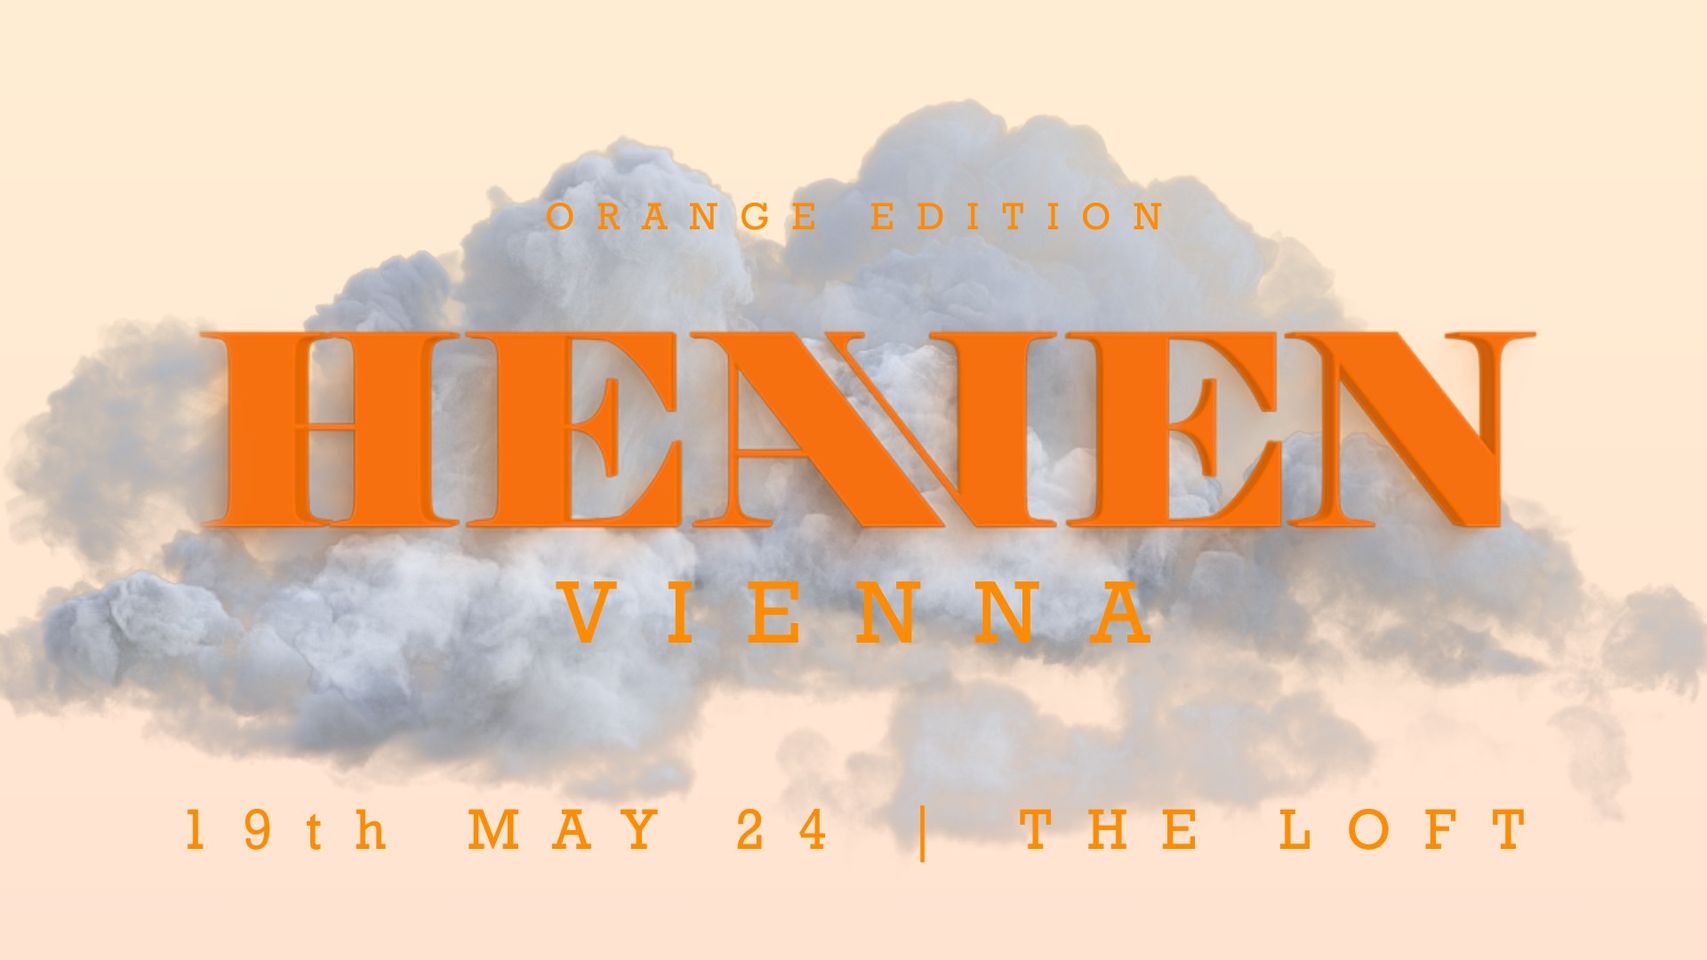 HEAVEN Vienna am 19. May 2024 @ The Loft.